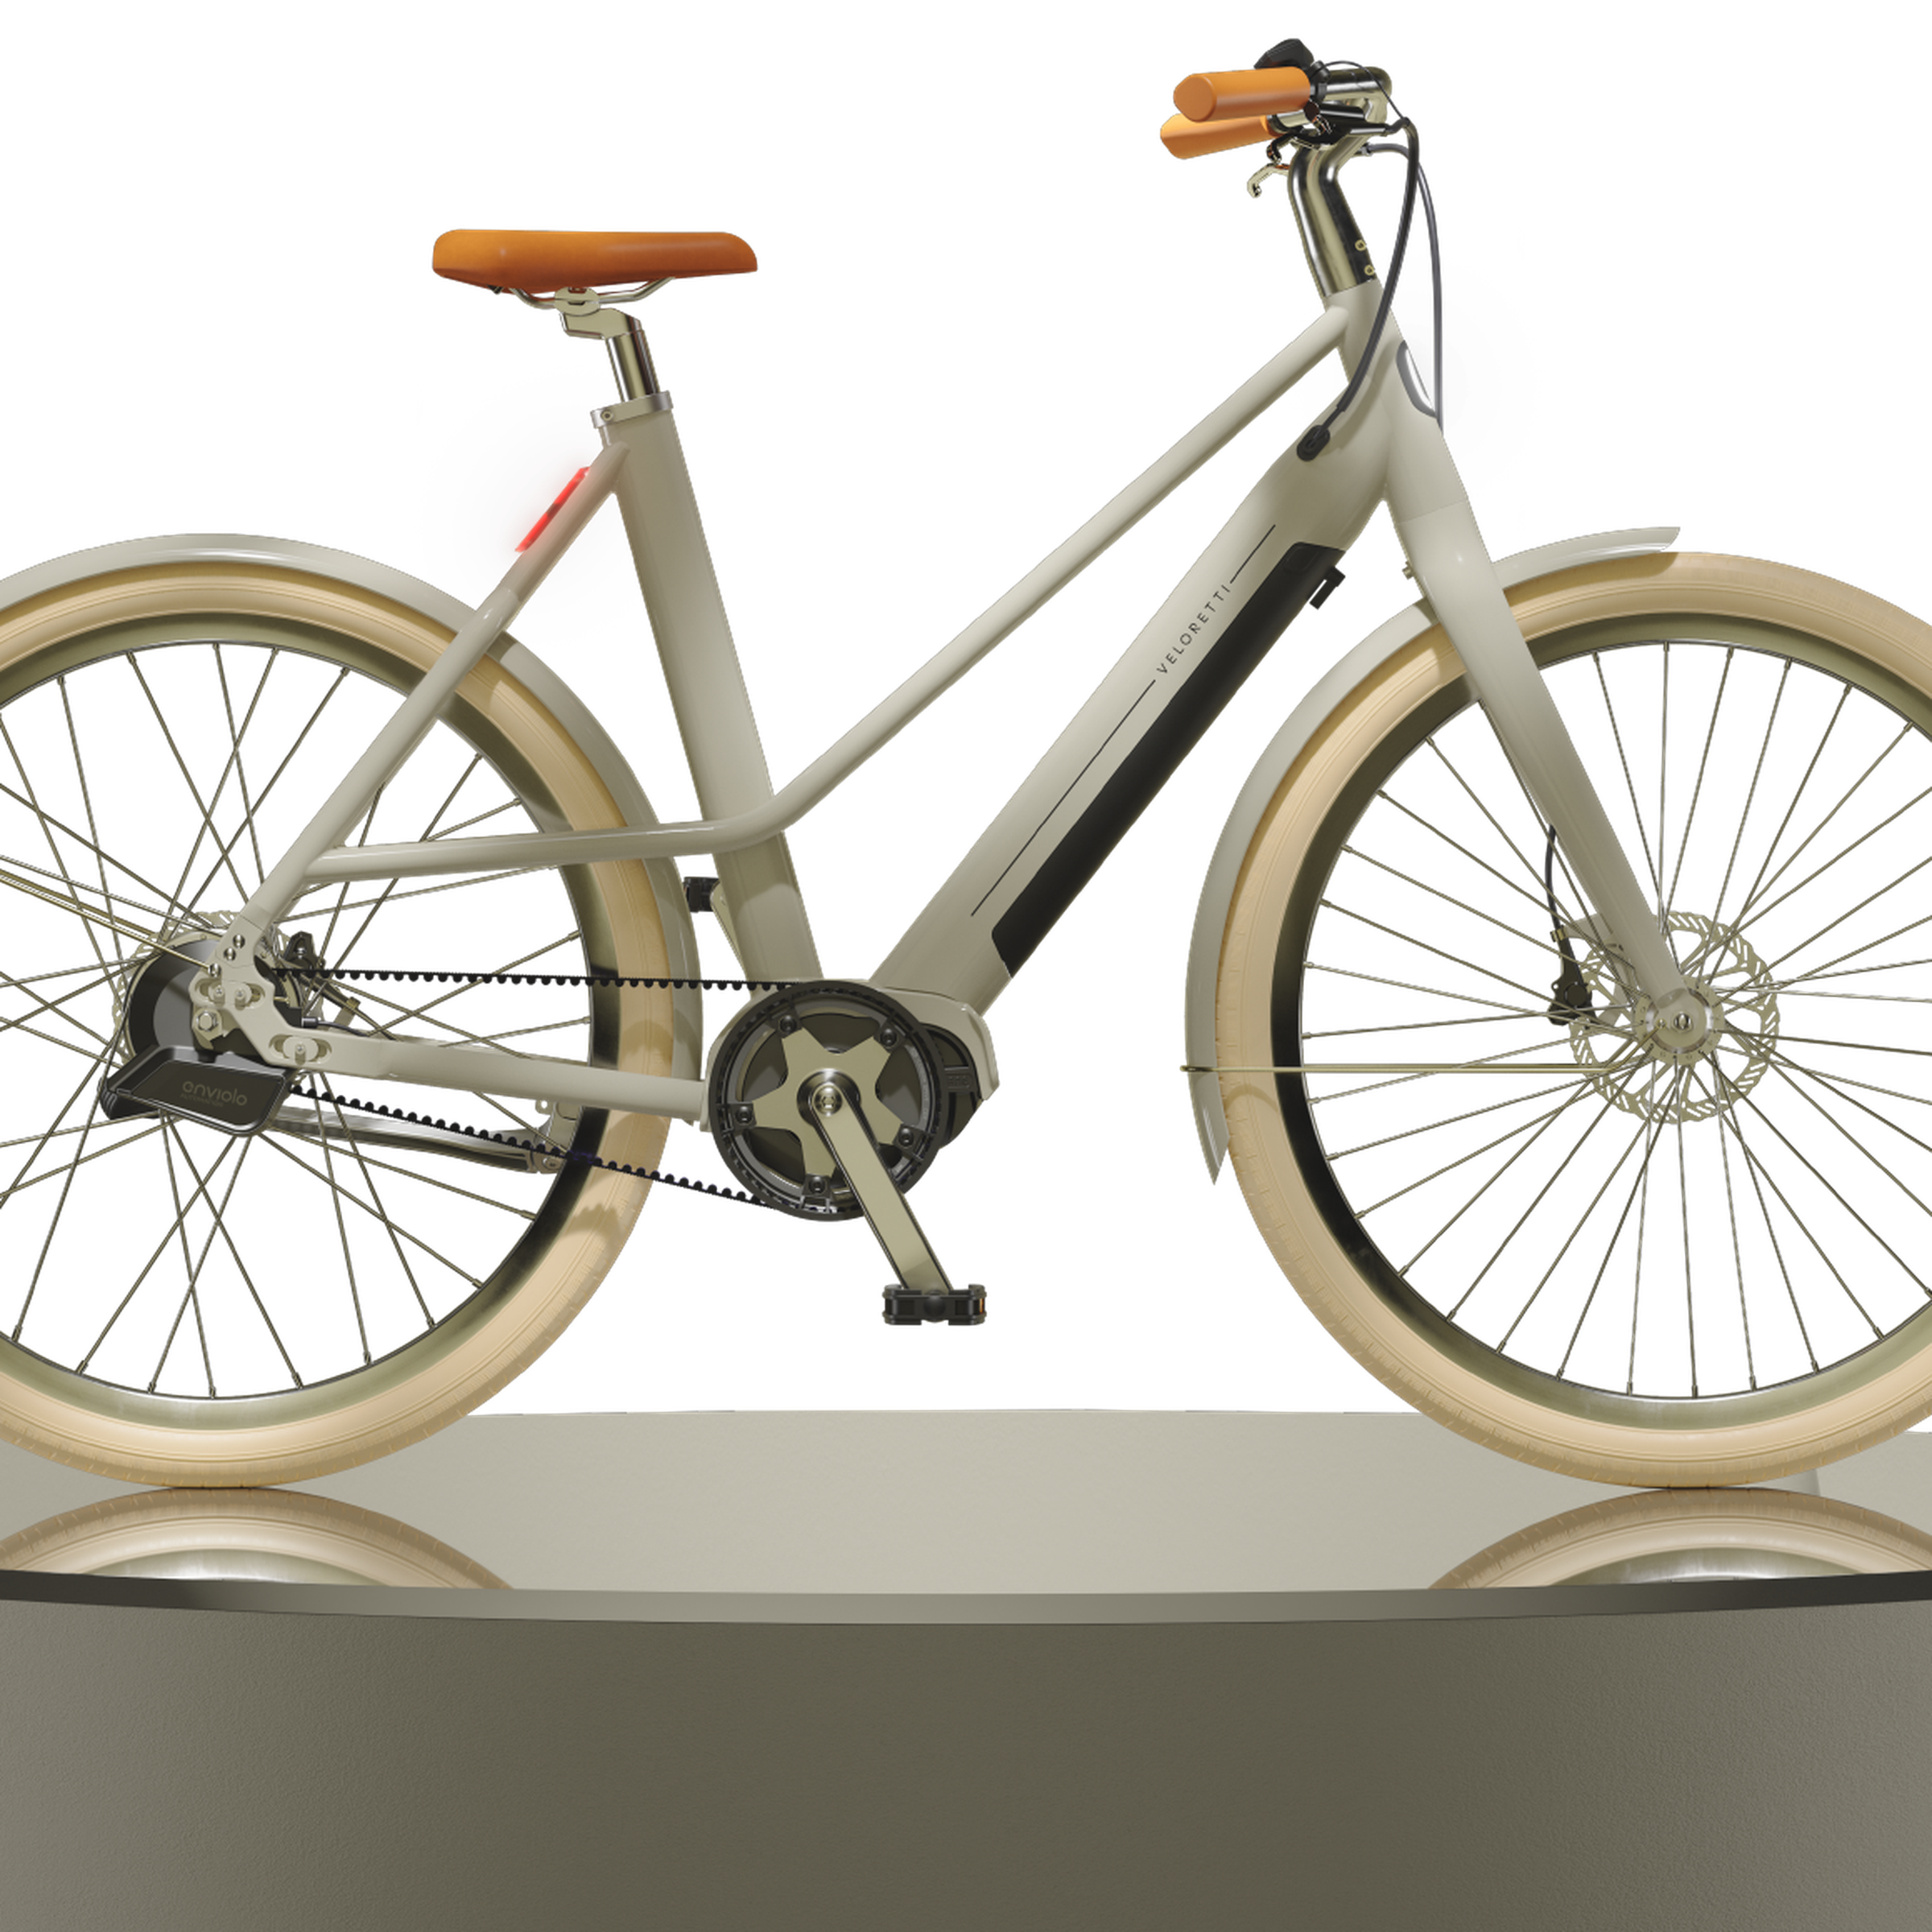 The Veloretti Ivy e-bike in pebble grey, swoon.